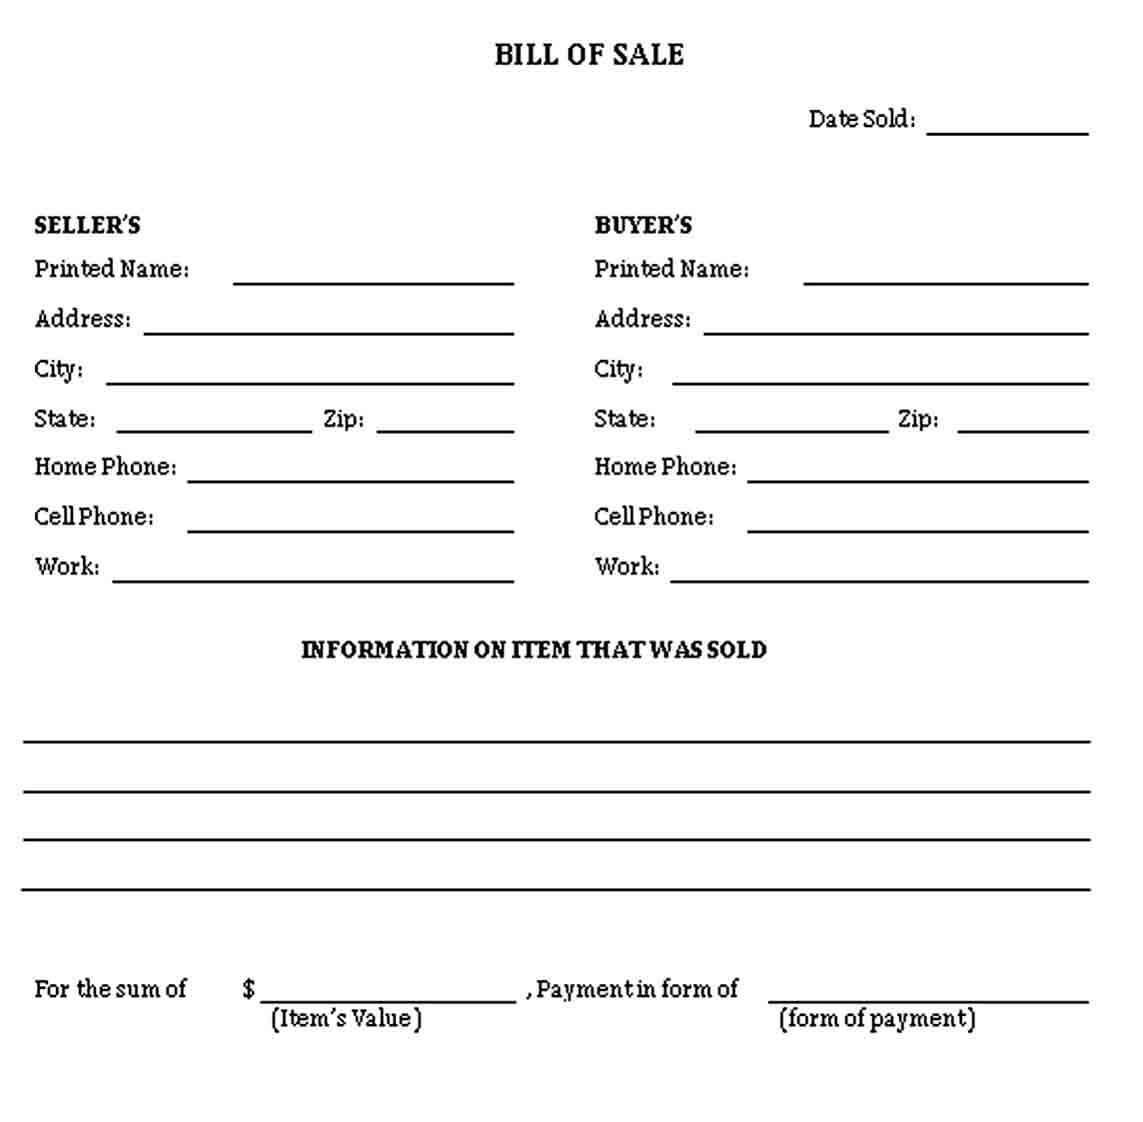 general bill of sale form 1